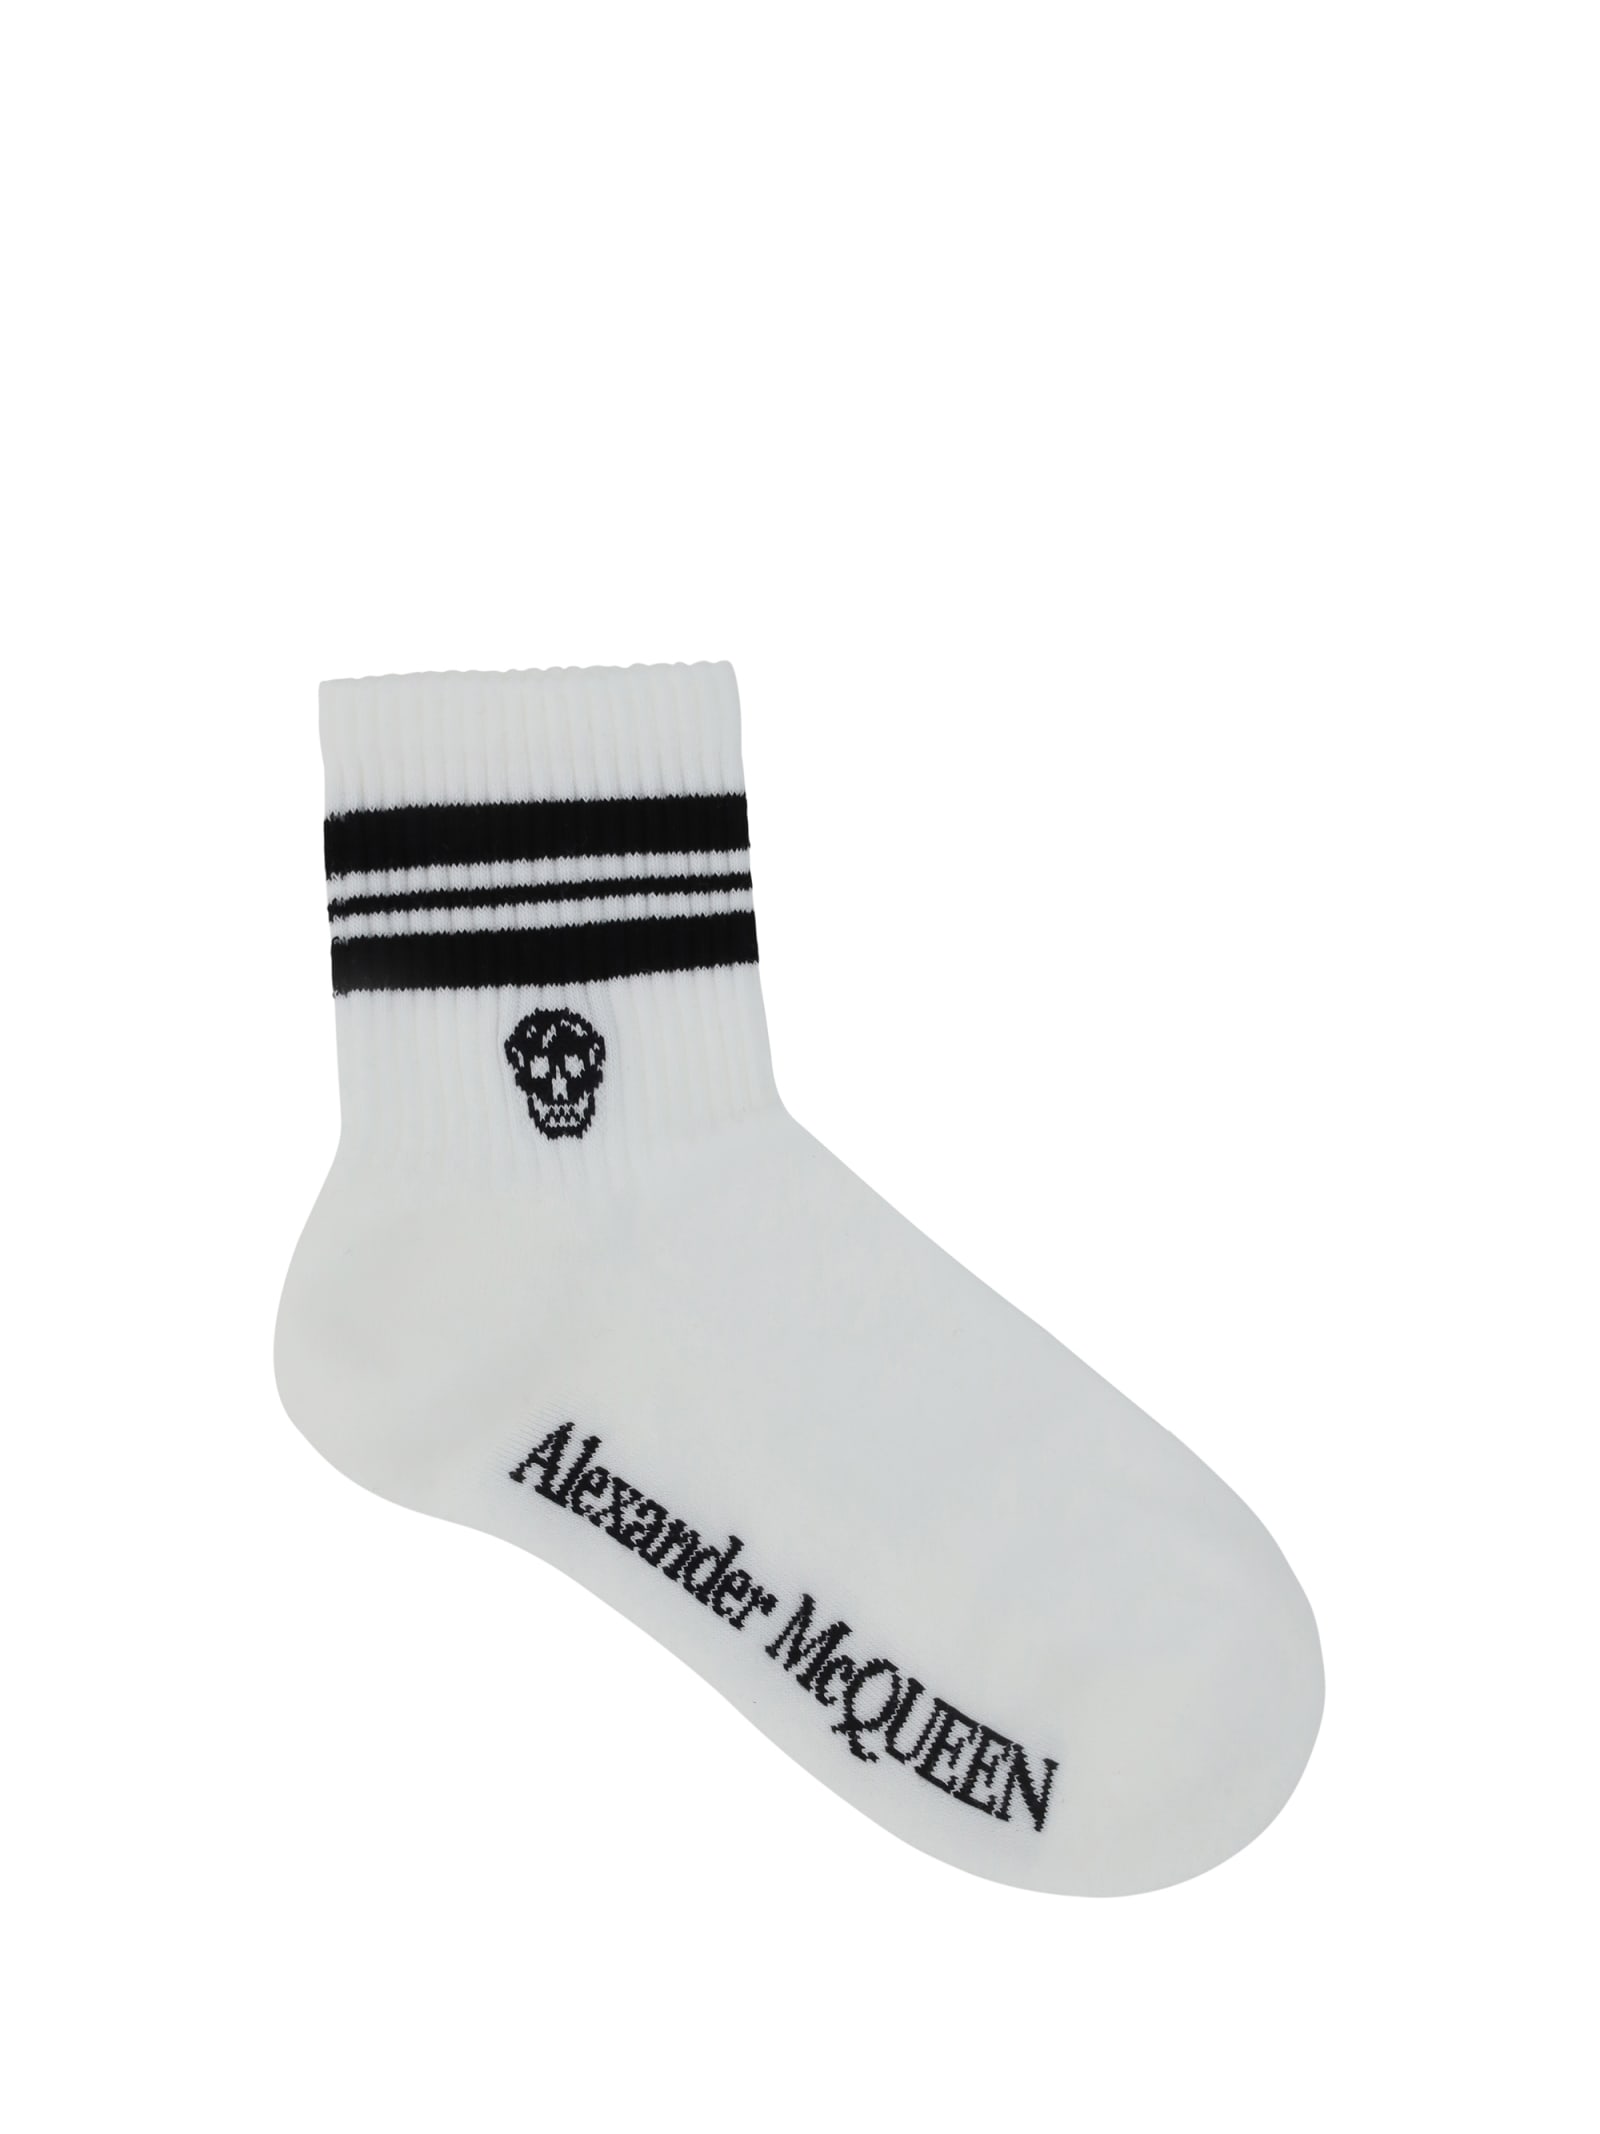 Alexander Mcqueen Skull Socks In White/black